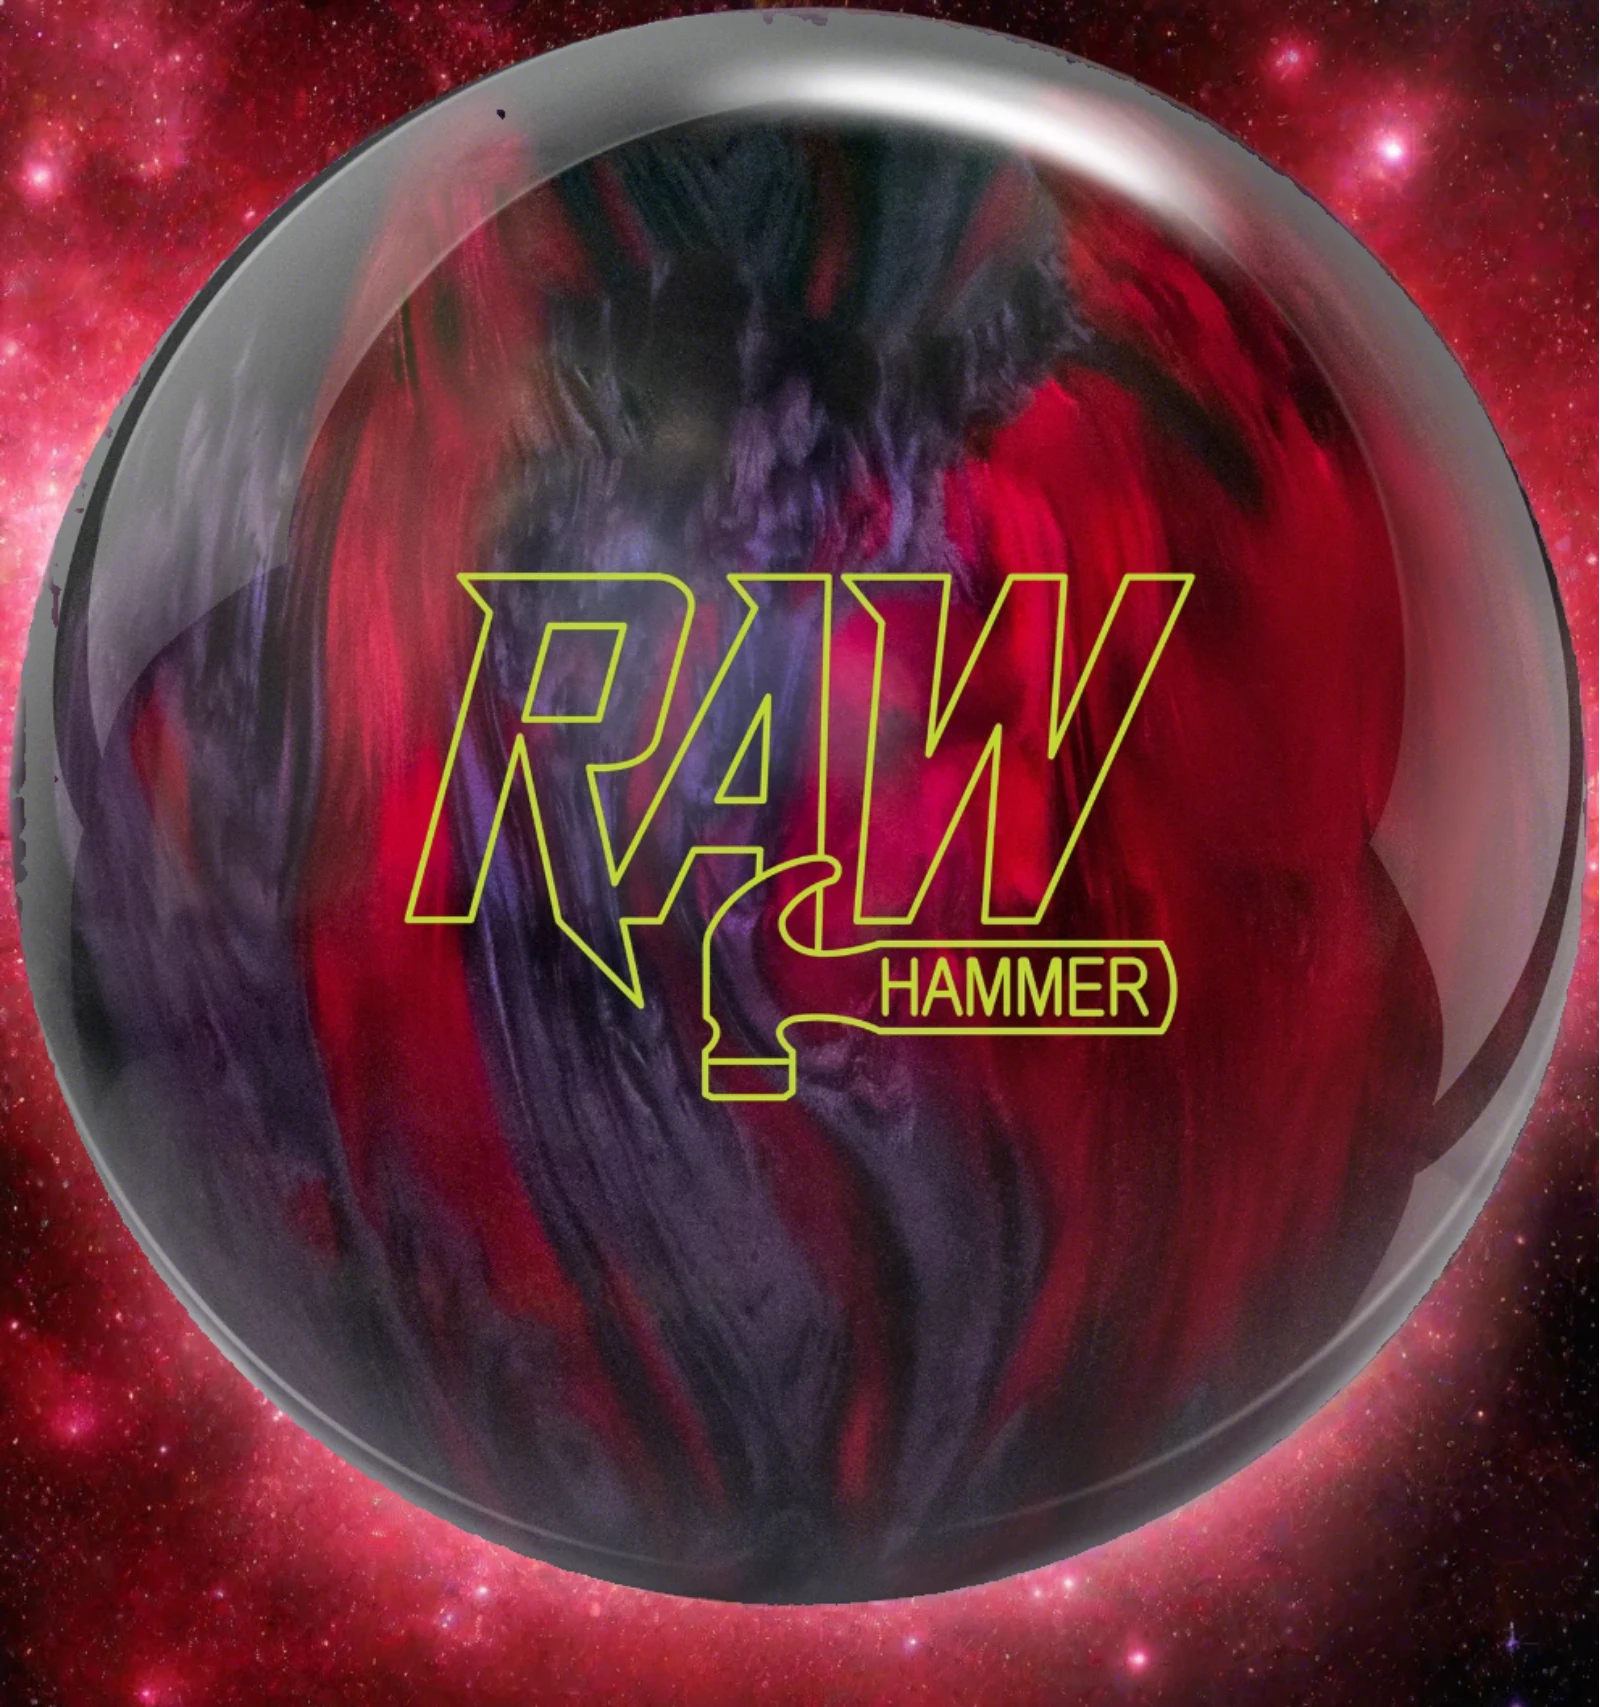 Hammer "Raw" Series